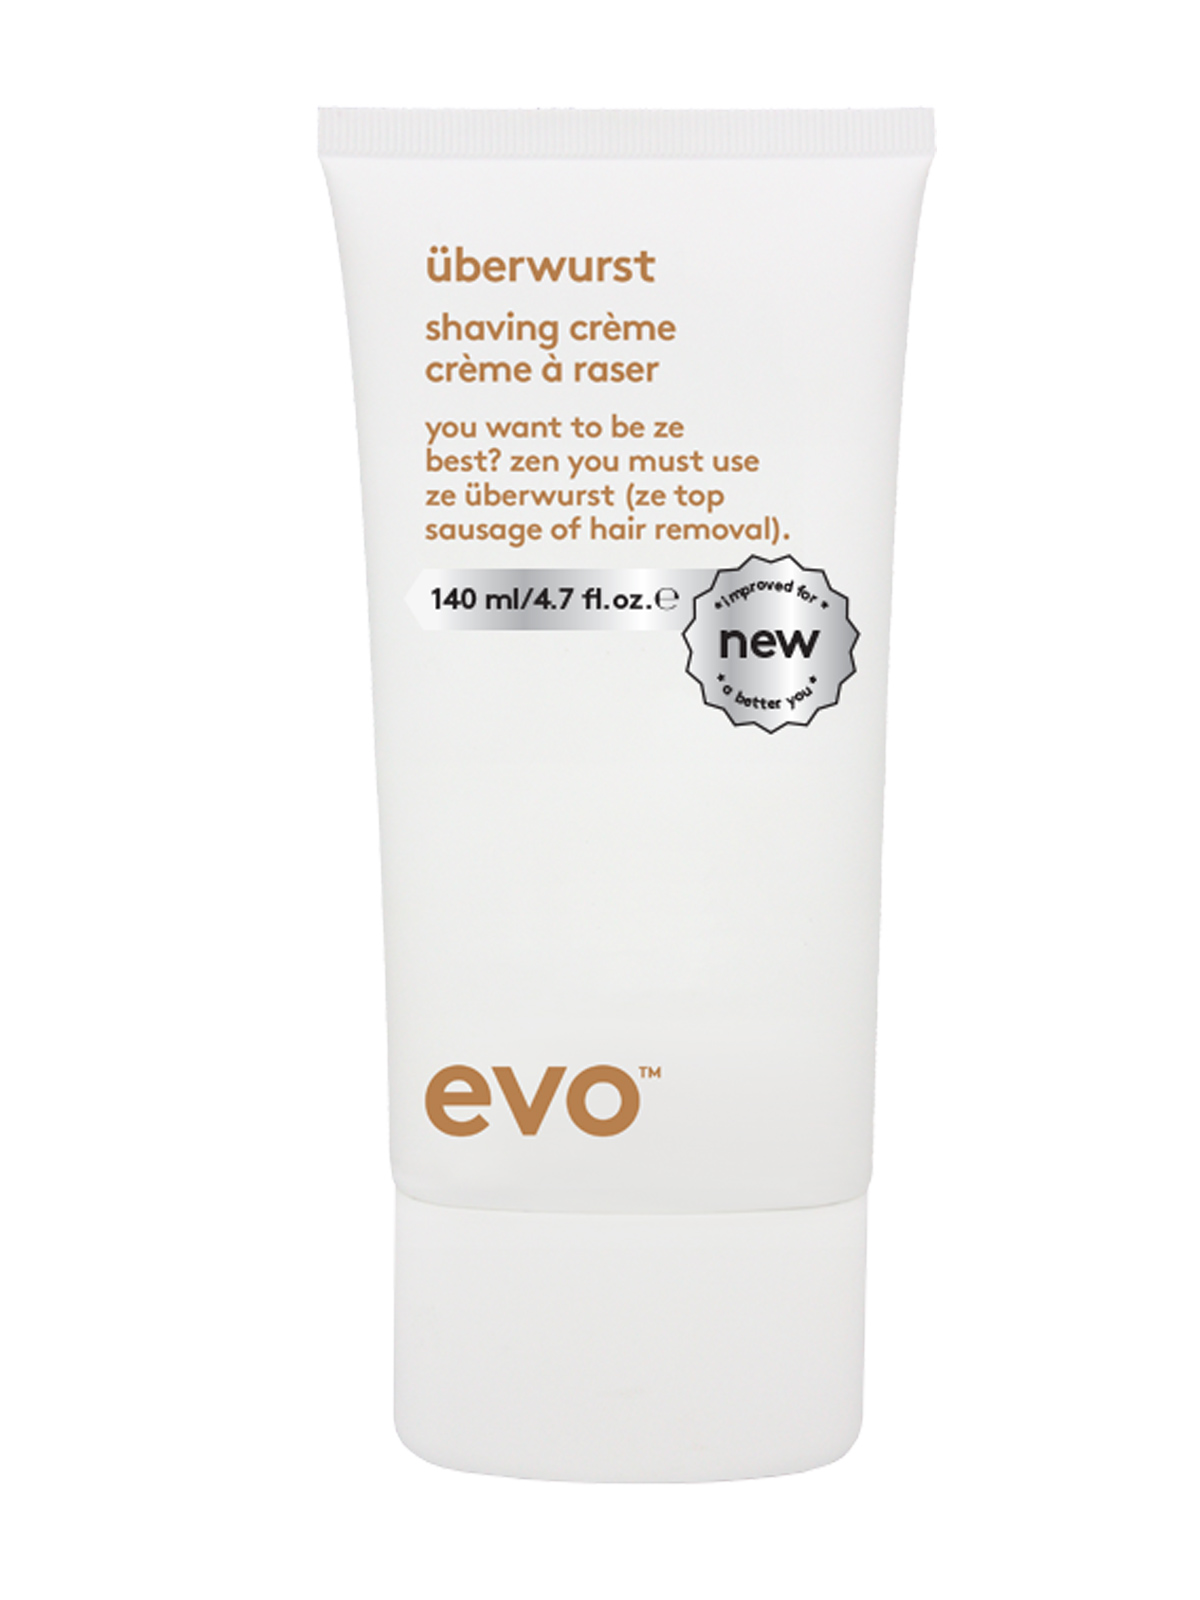 EVO Überwurst Shaving Crème